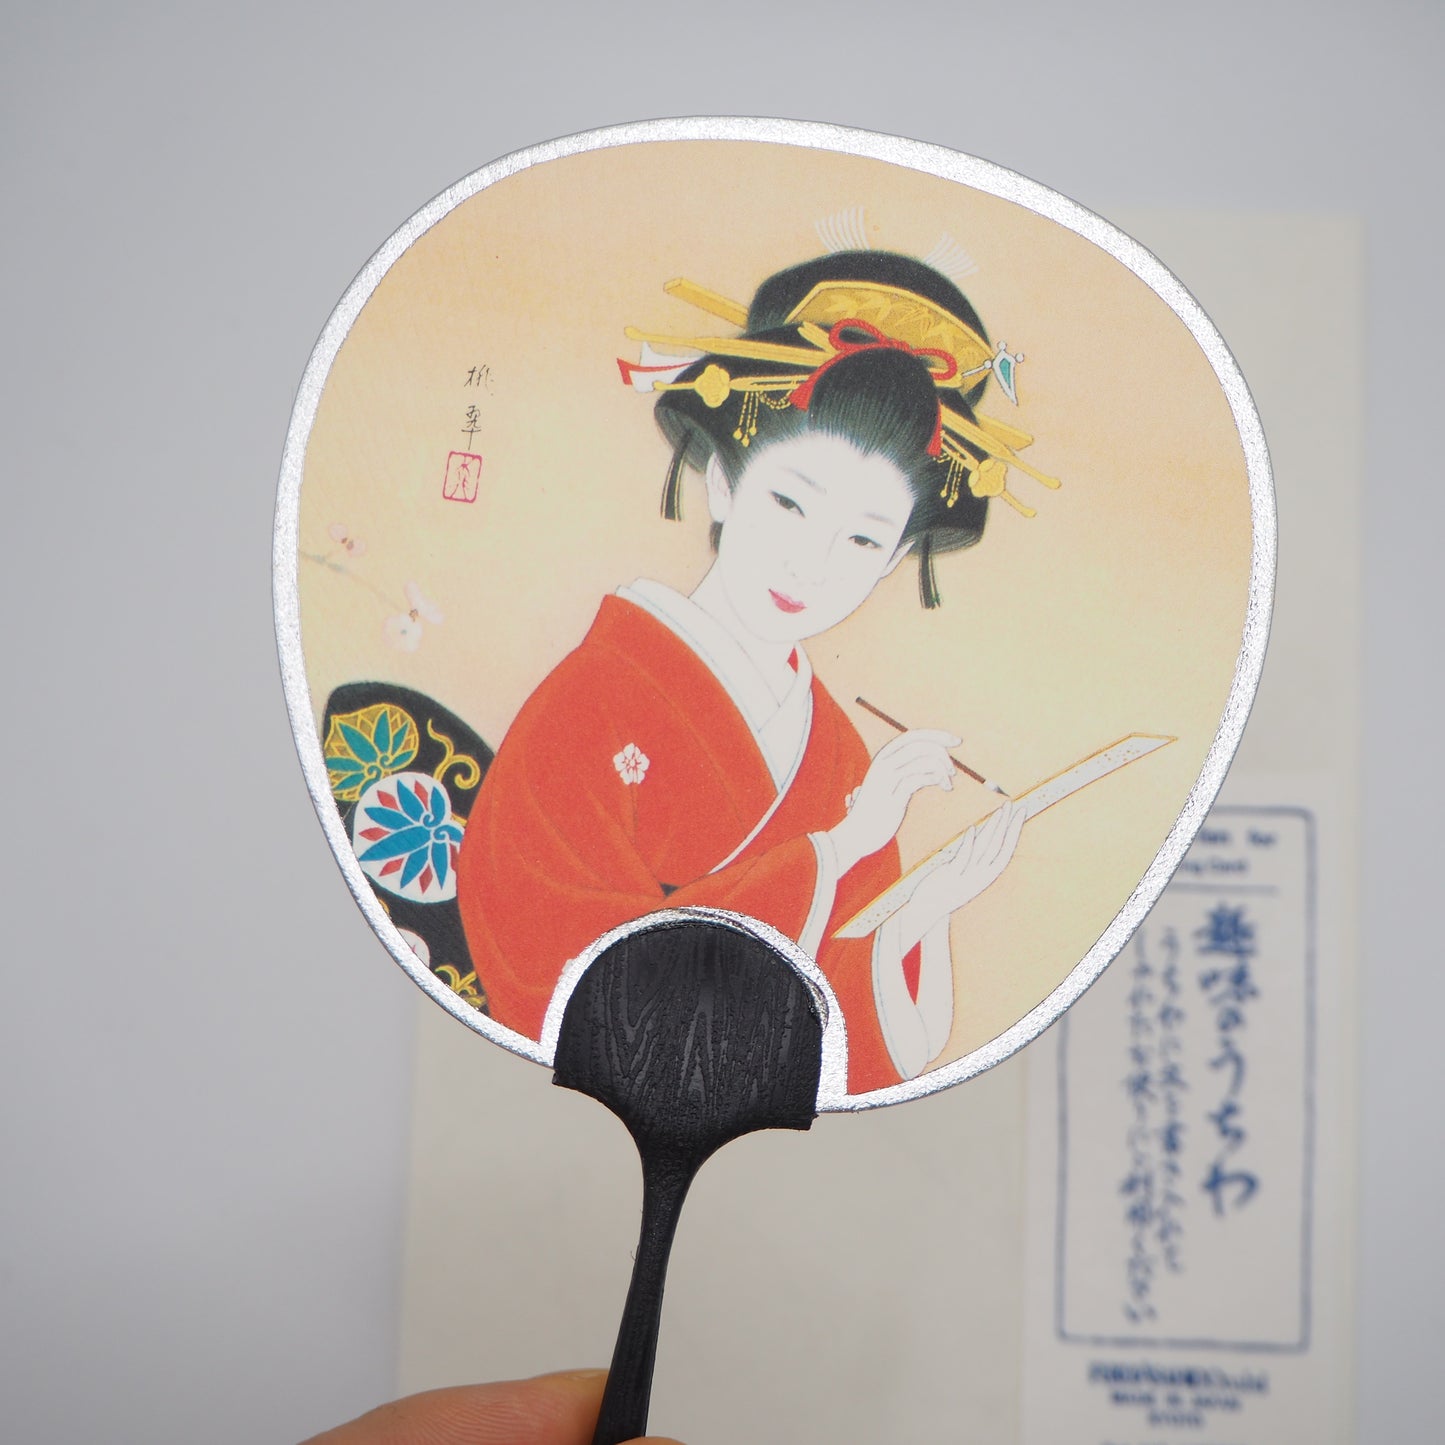 Small Uchiwa Fan Greeting Card - A letter